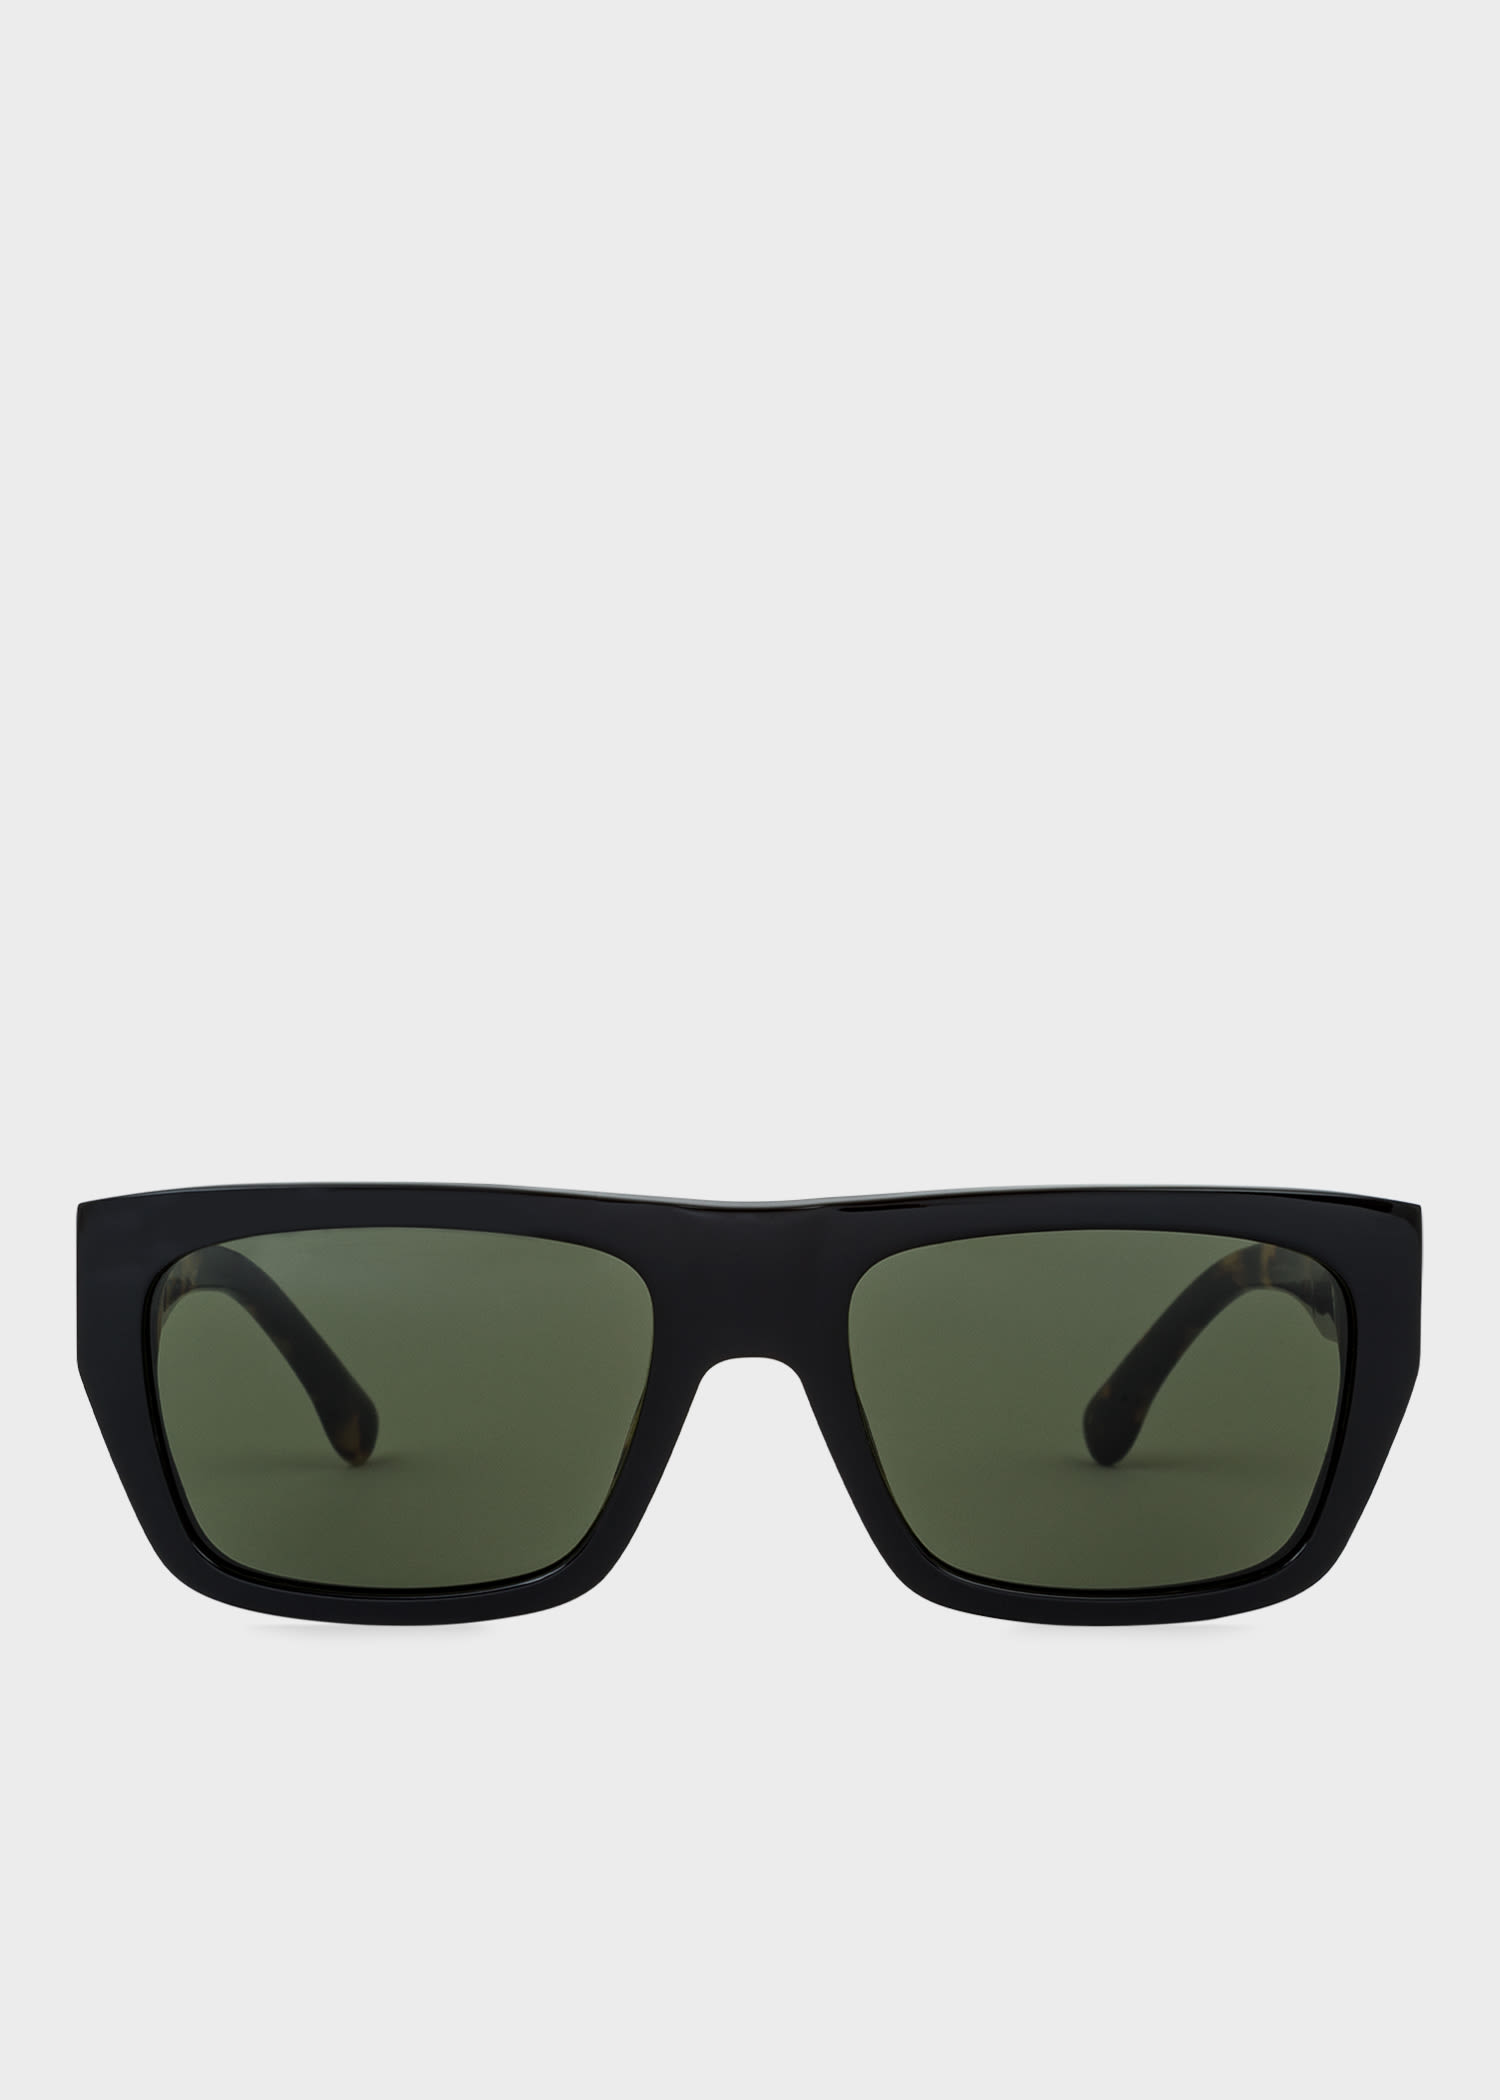 Paul Smith Black 'Earl' Sunglasses